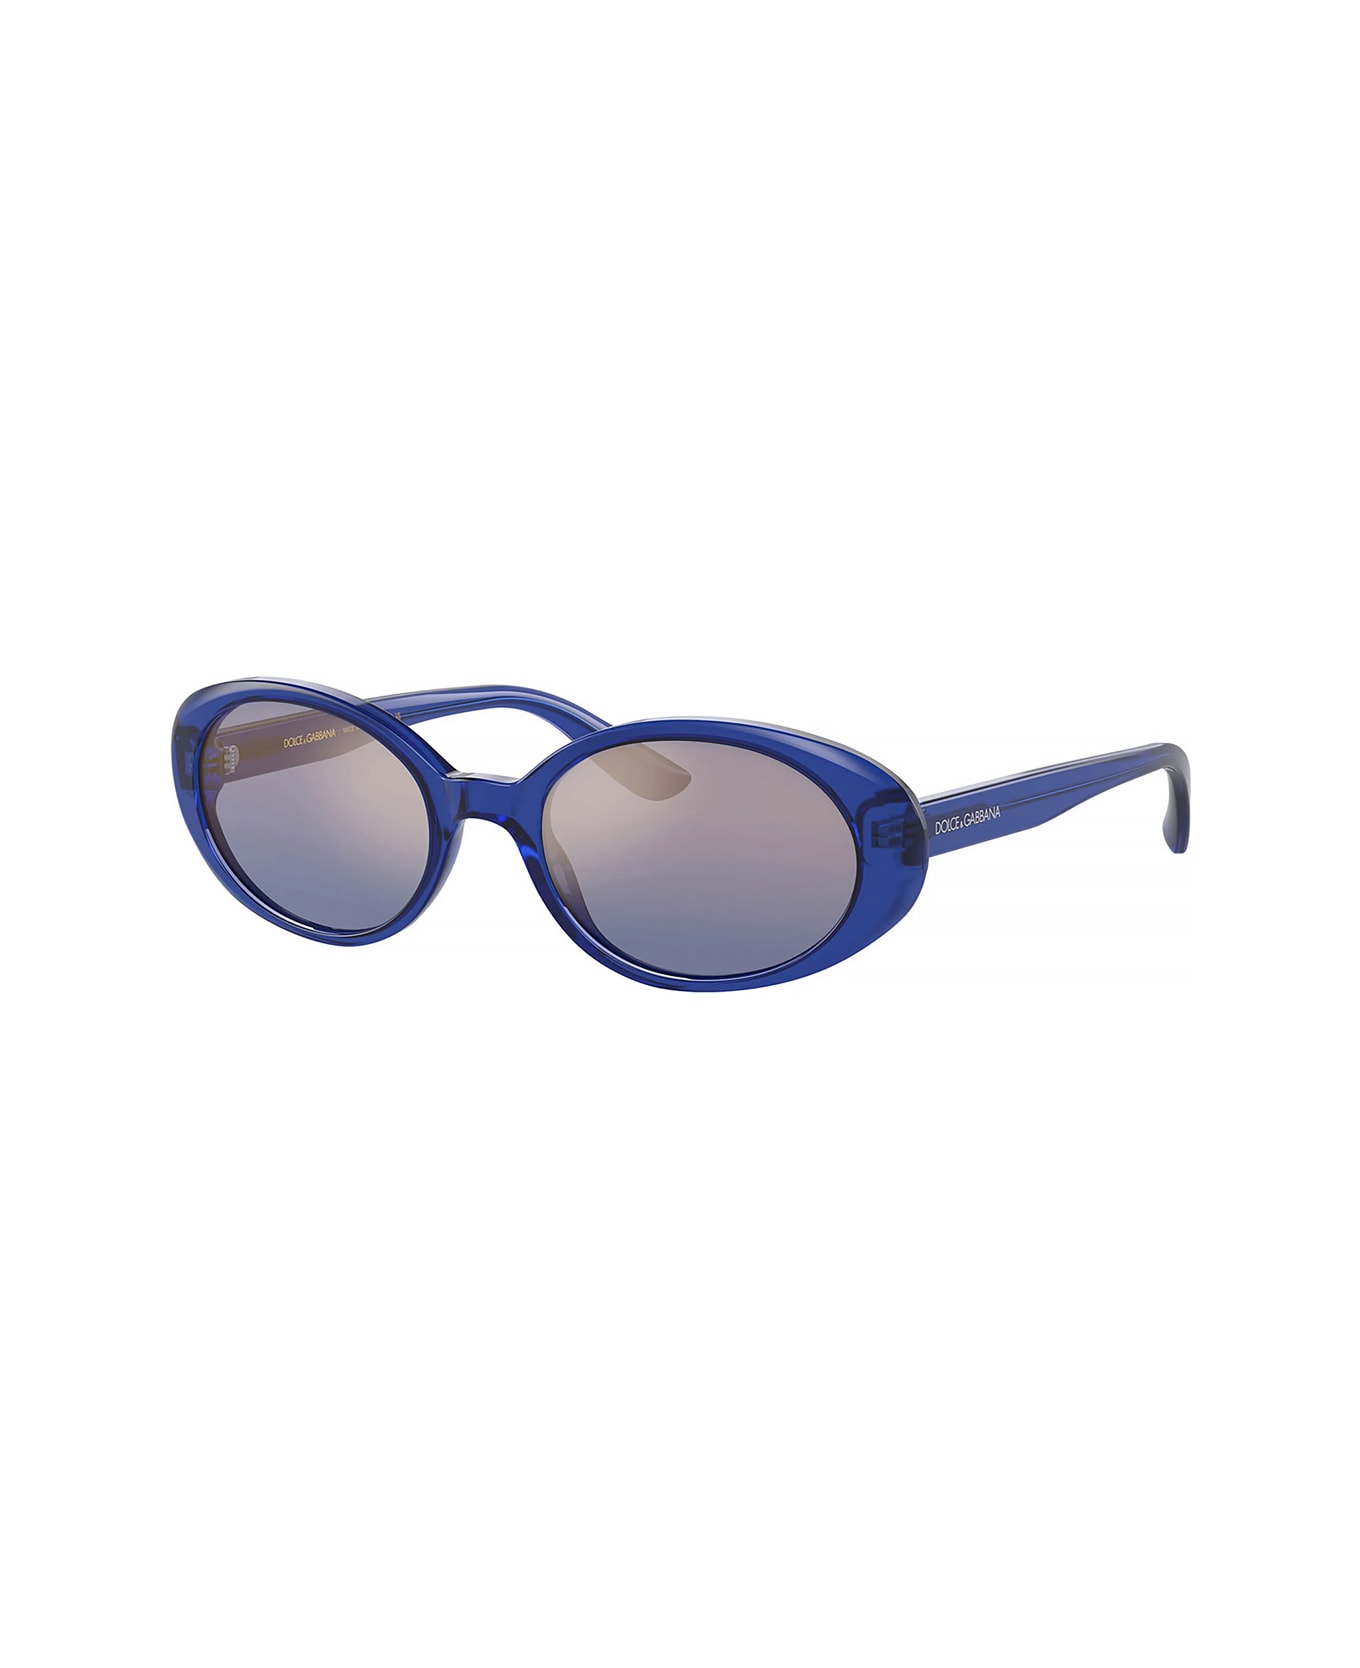 Dolce & Gabbana Eyewear Dg4443 339833 Sunglasses - Blu